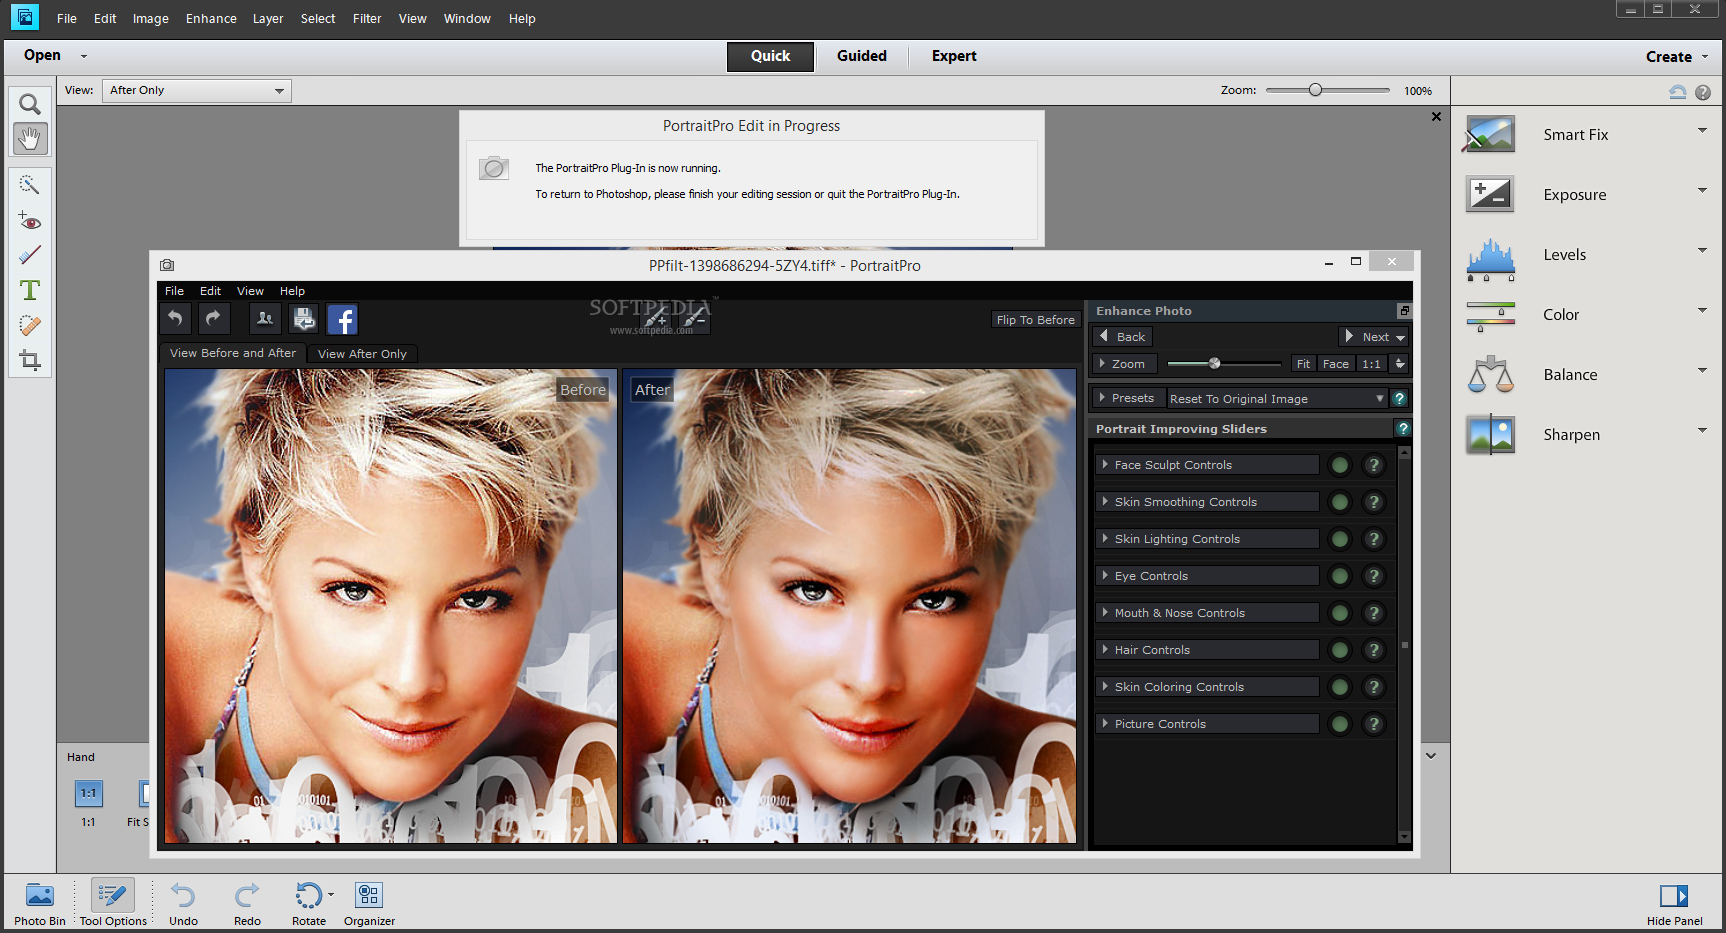 portraitpro studio max 15 full for mac